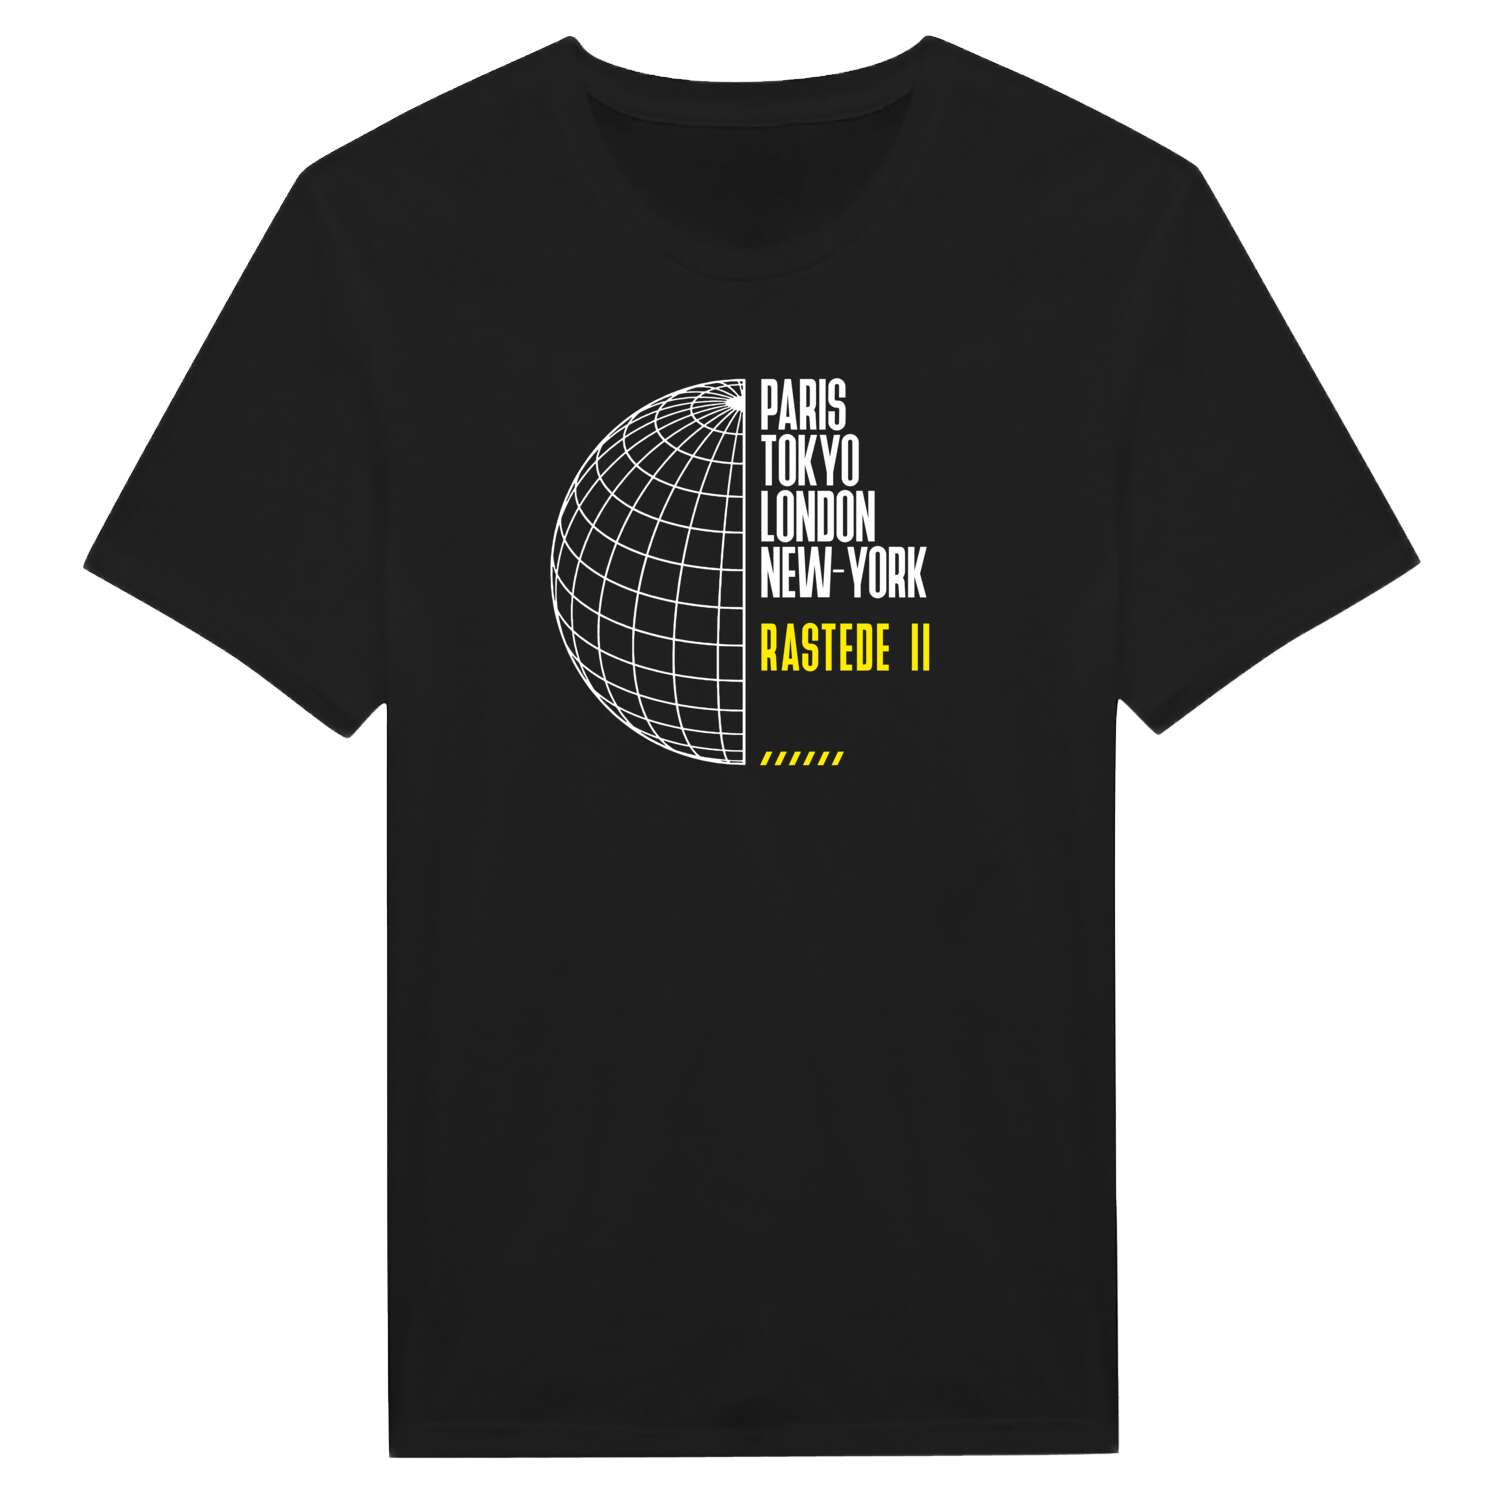 Rastede II T-Shirt »Paris Tokyo London«